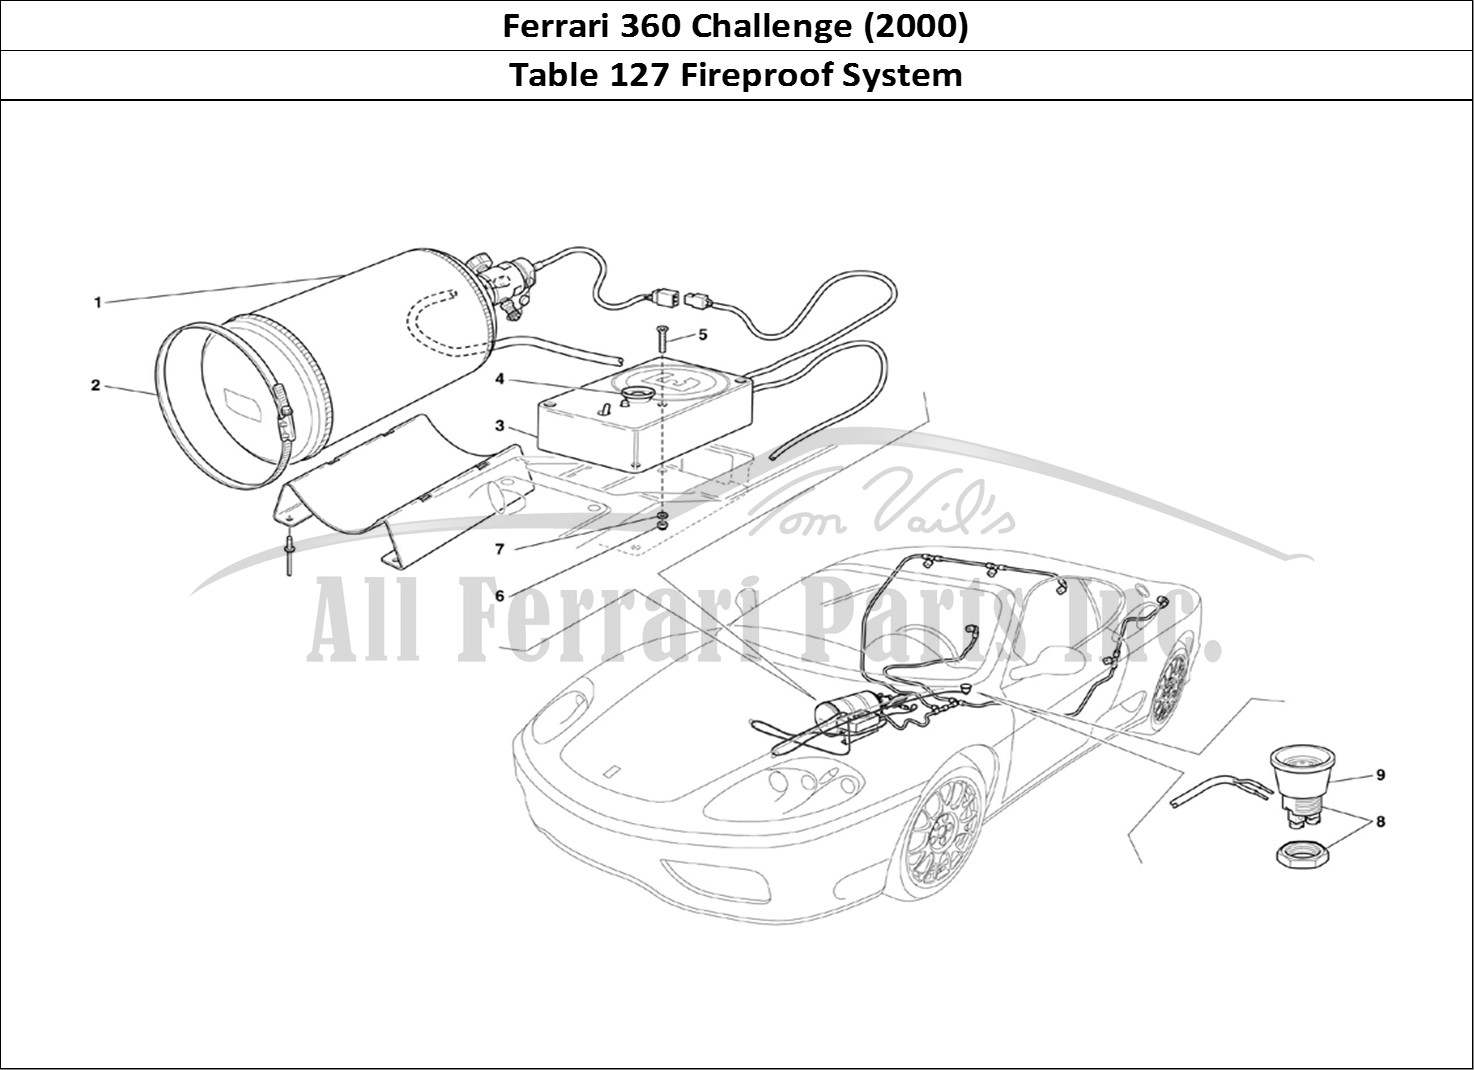 Ferrari Parts Ferrari 360 Challenge (2000) Page 127 Fire-Proof System